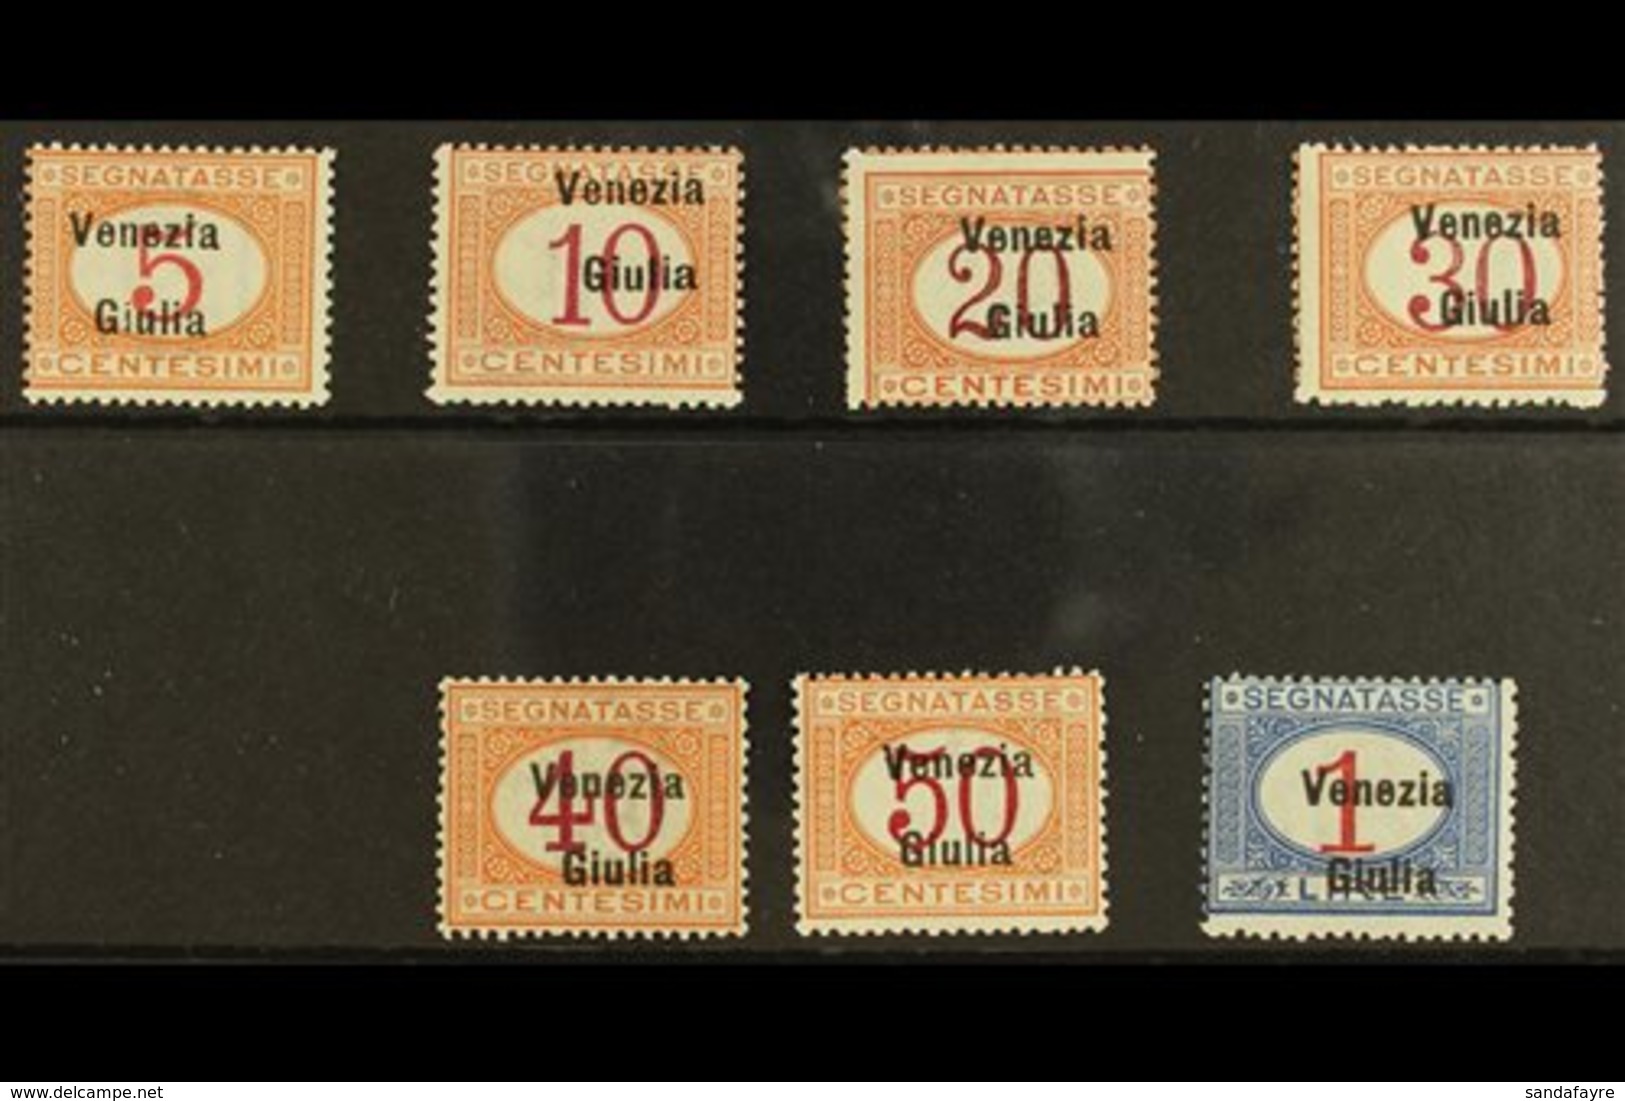 VENEZIA GIULIA POSTAGE DUES 1918 Overprint Set Complete, Sass S4, Very Fine Never Hinged Mint. Cat €2500 (£1900) Rare Se - Unclassified